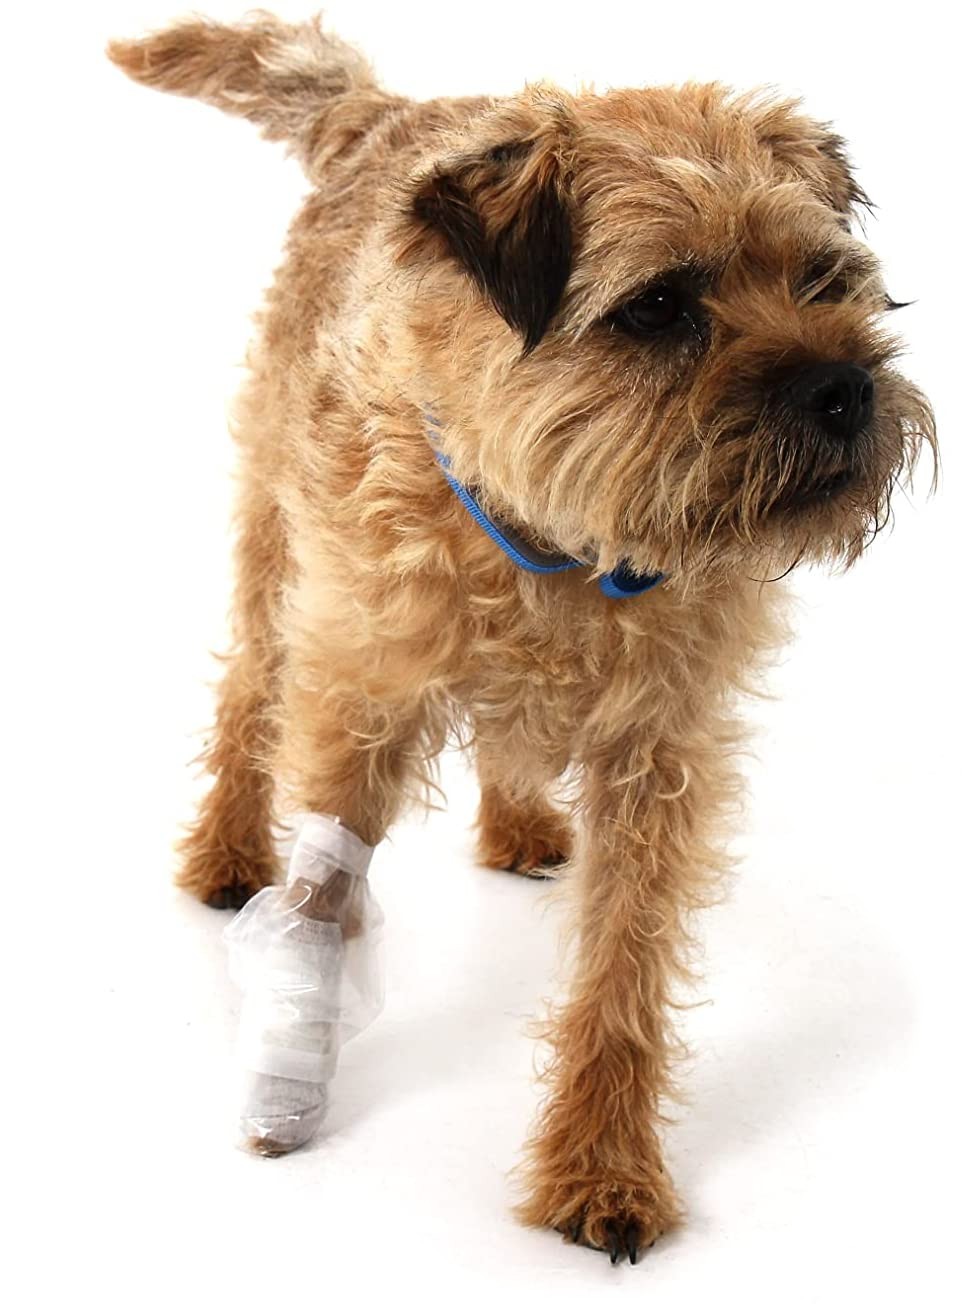 Mountain Paws Dog First Aid Kit Portable Pet Medical Kit